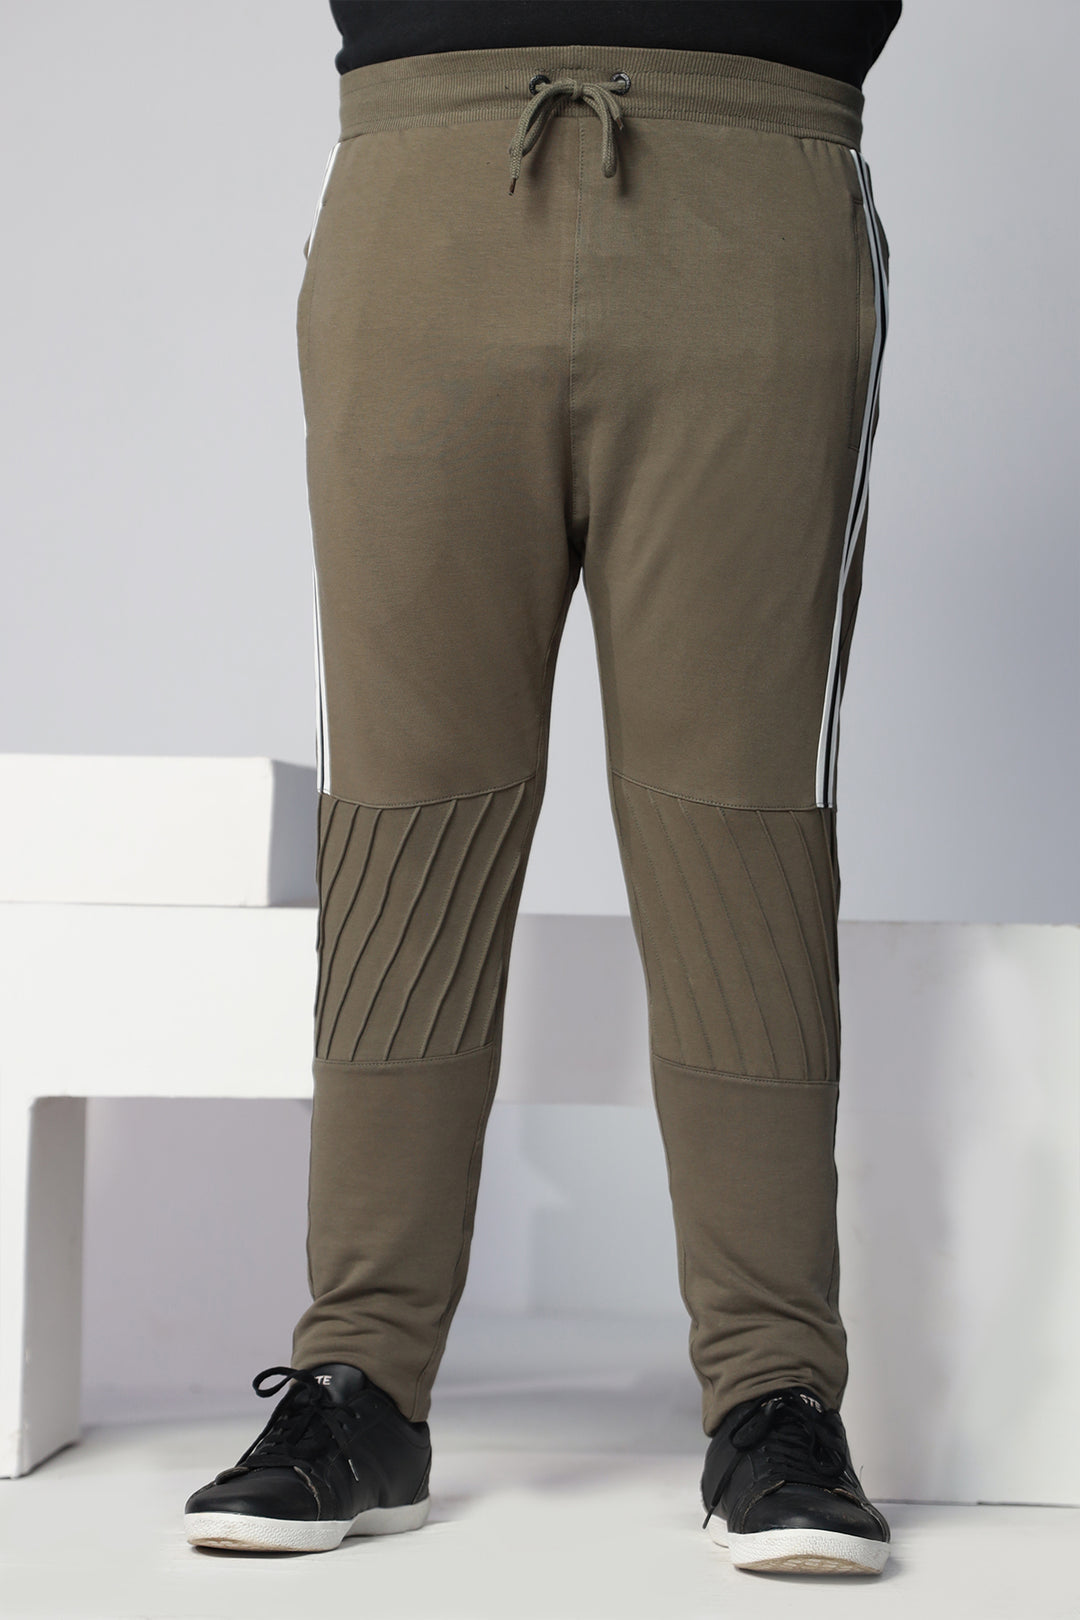 Men's Plus Size Pintux Trouser Online in Pakistan 